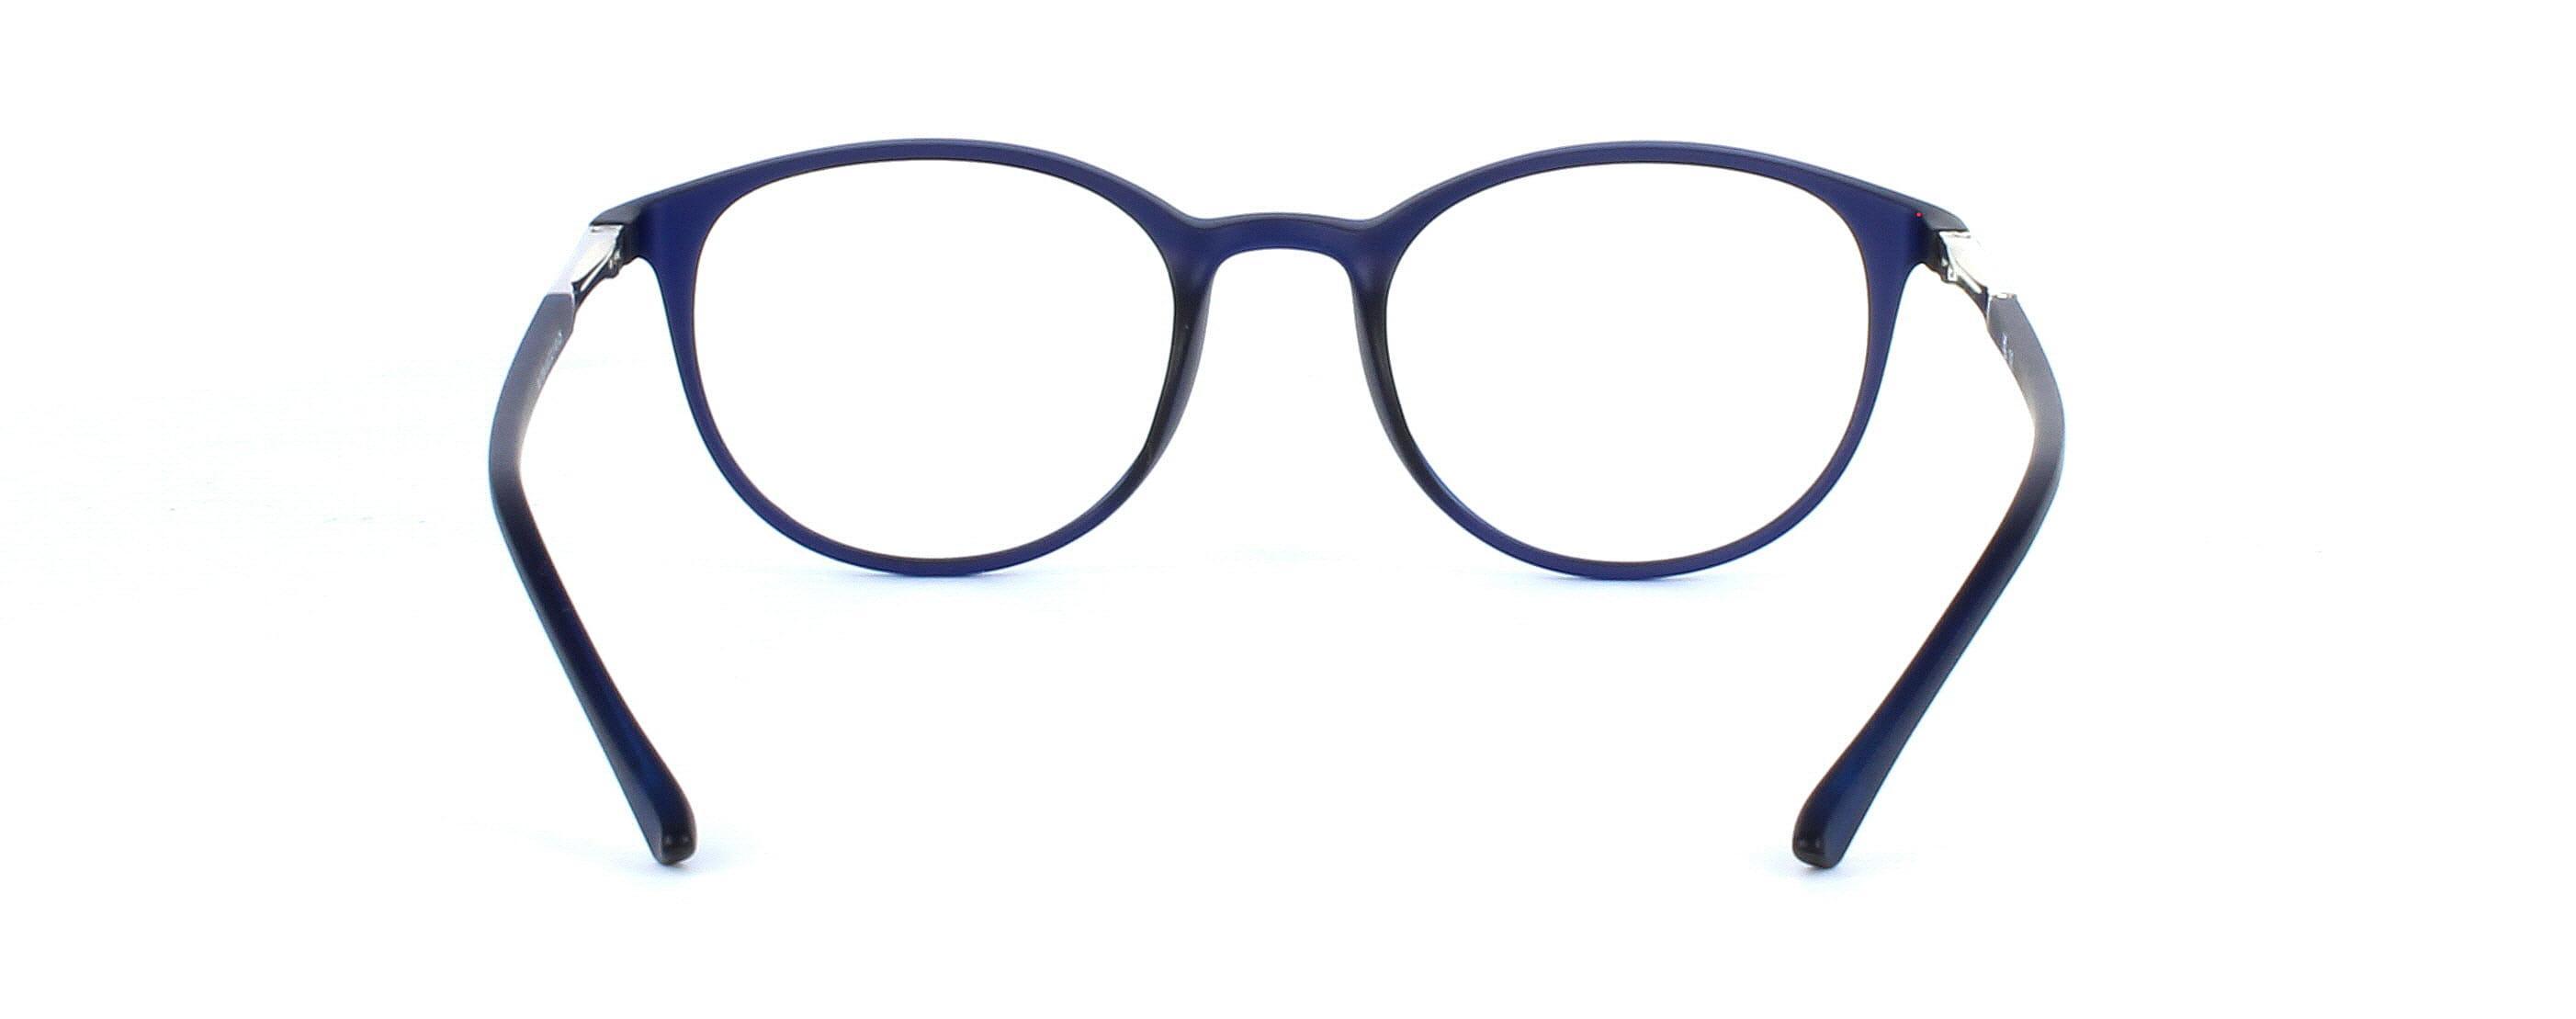 Mensa - Blue - Ladies round shaped plastic glasses - image view 3